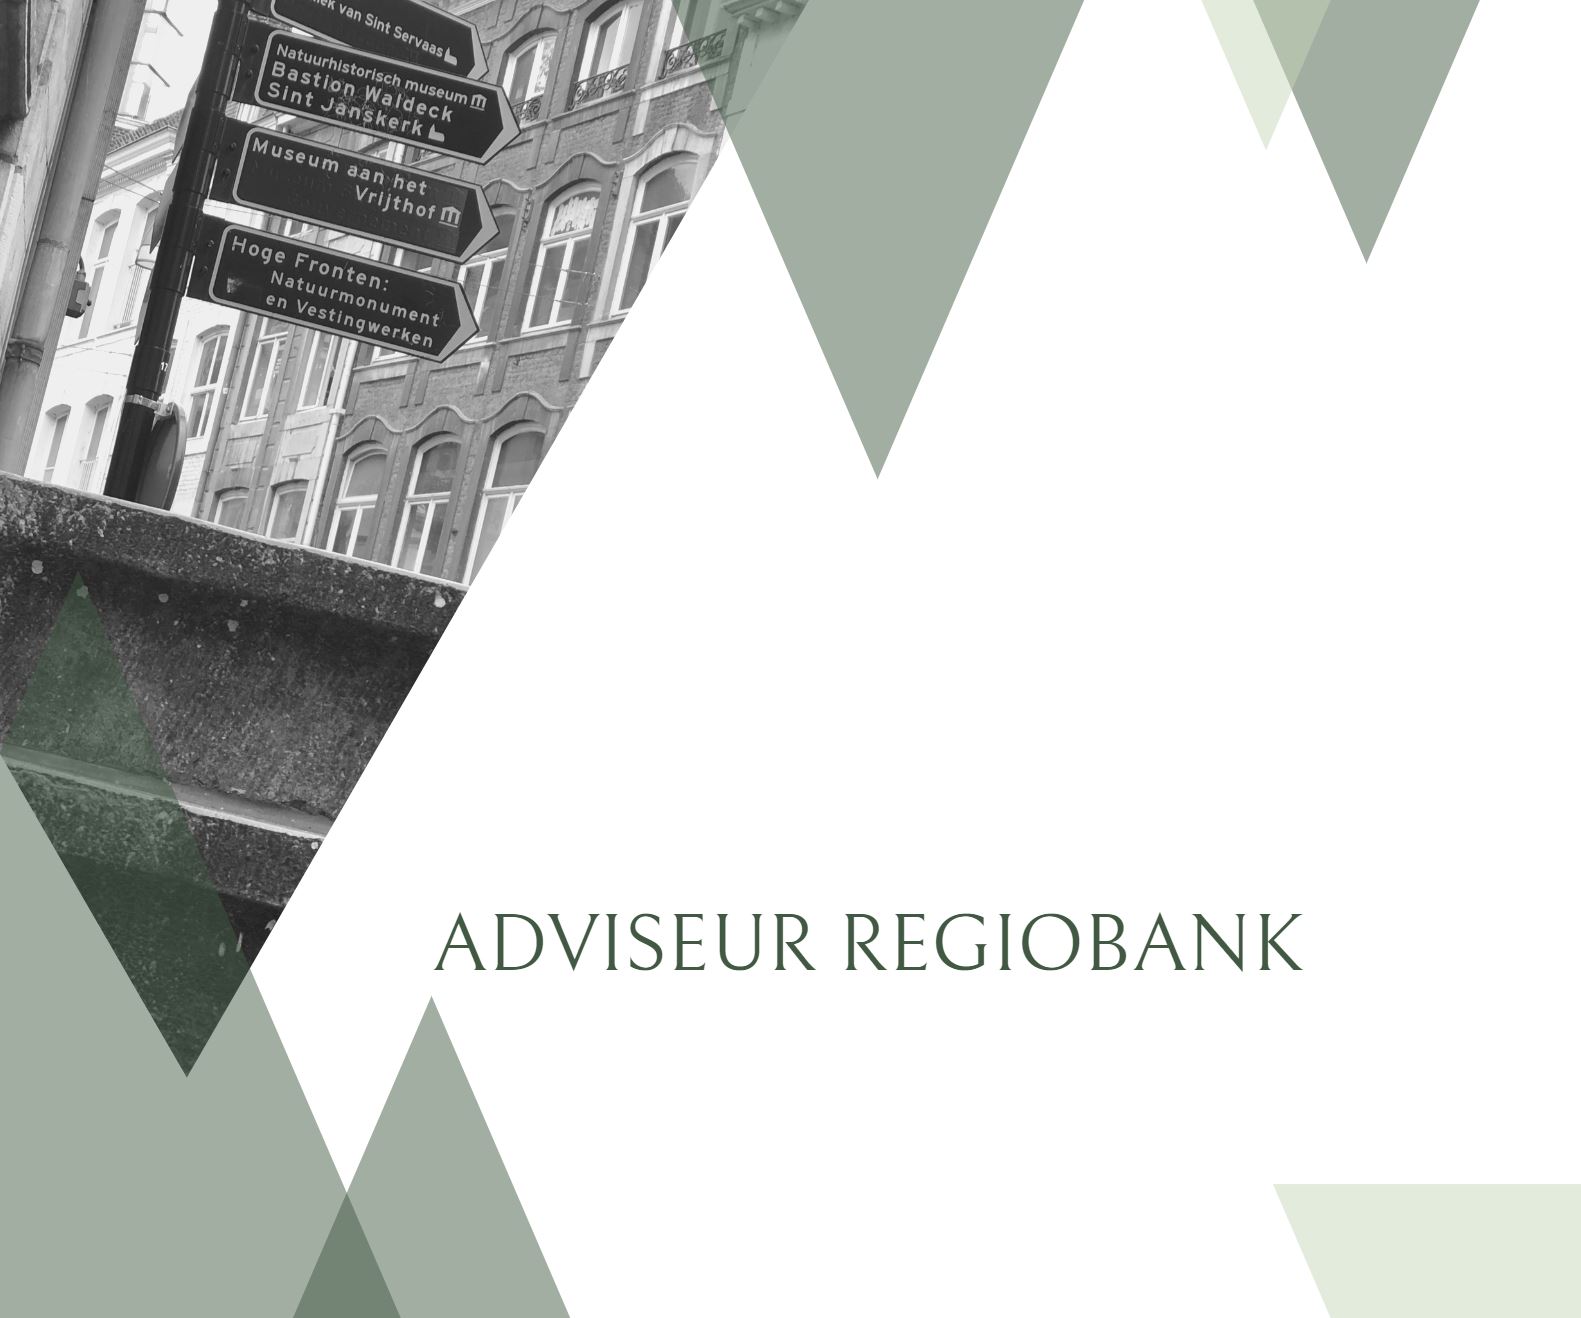 Adviseur Regiobank